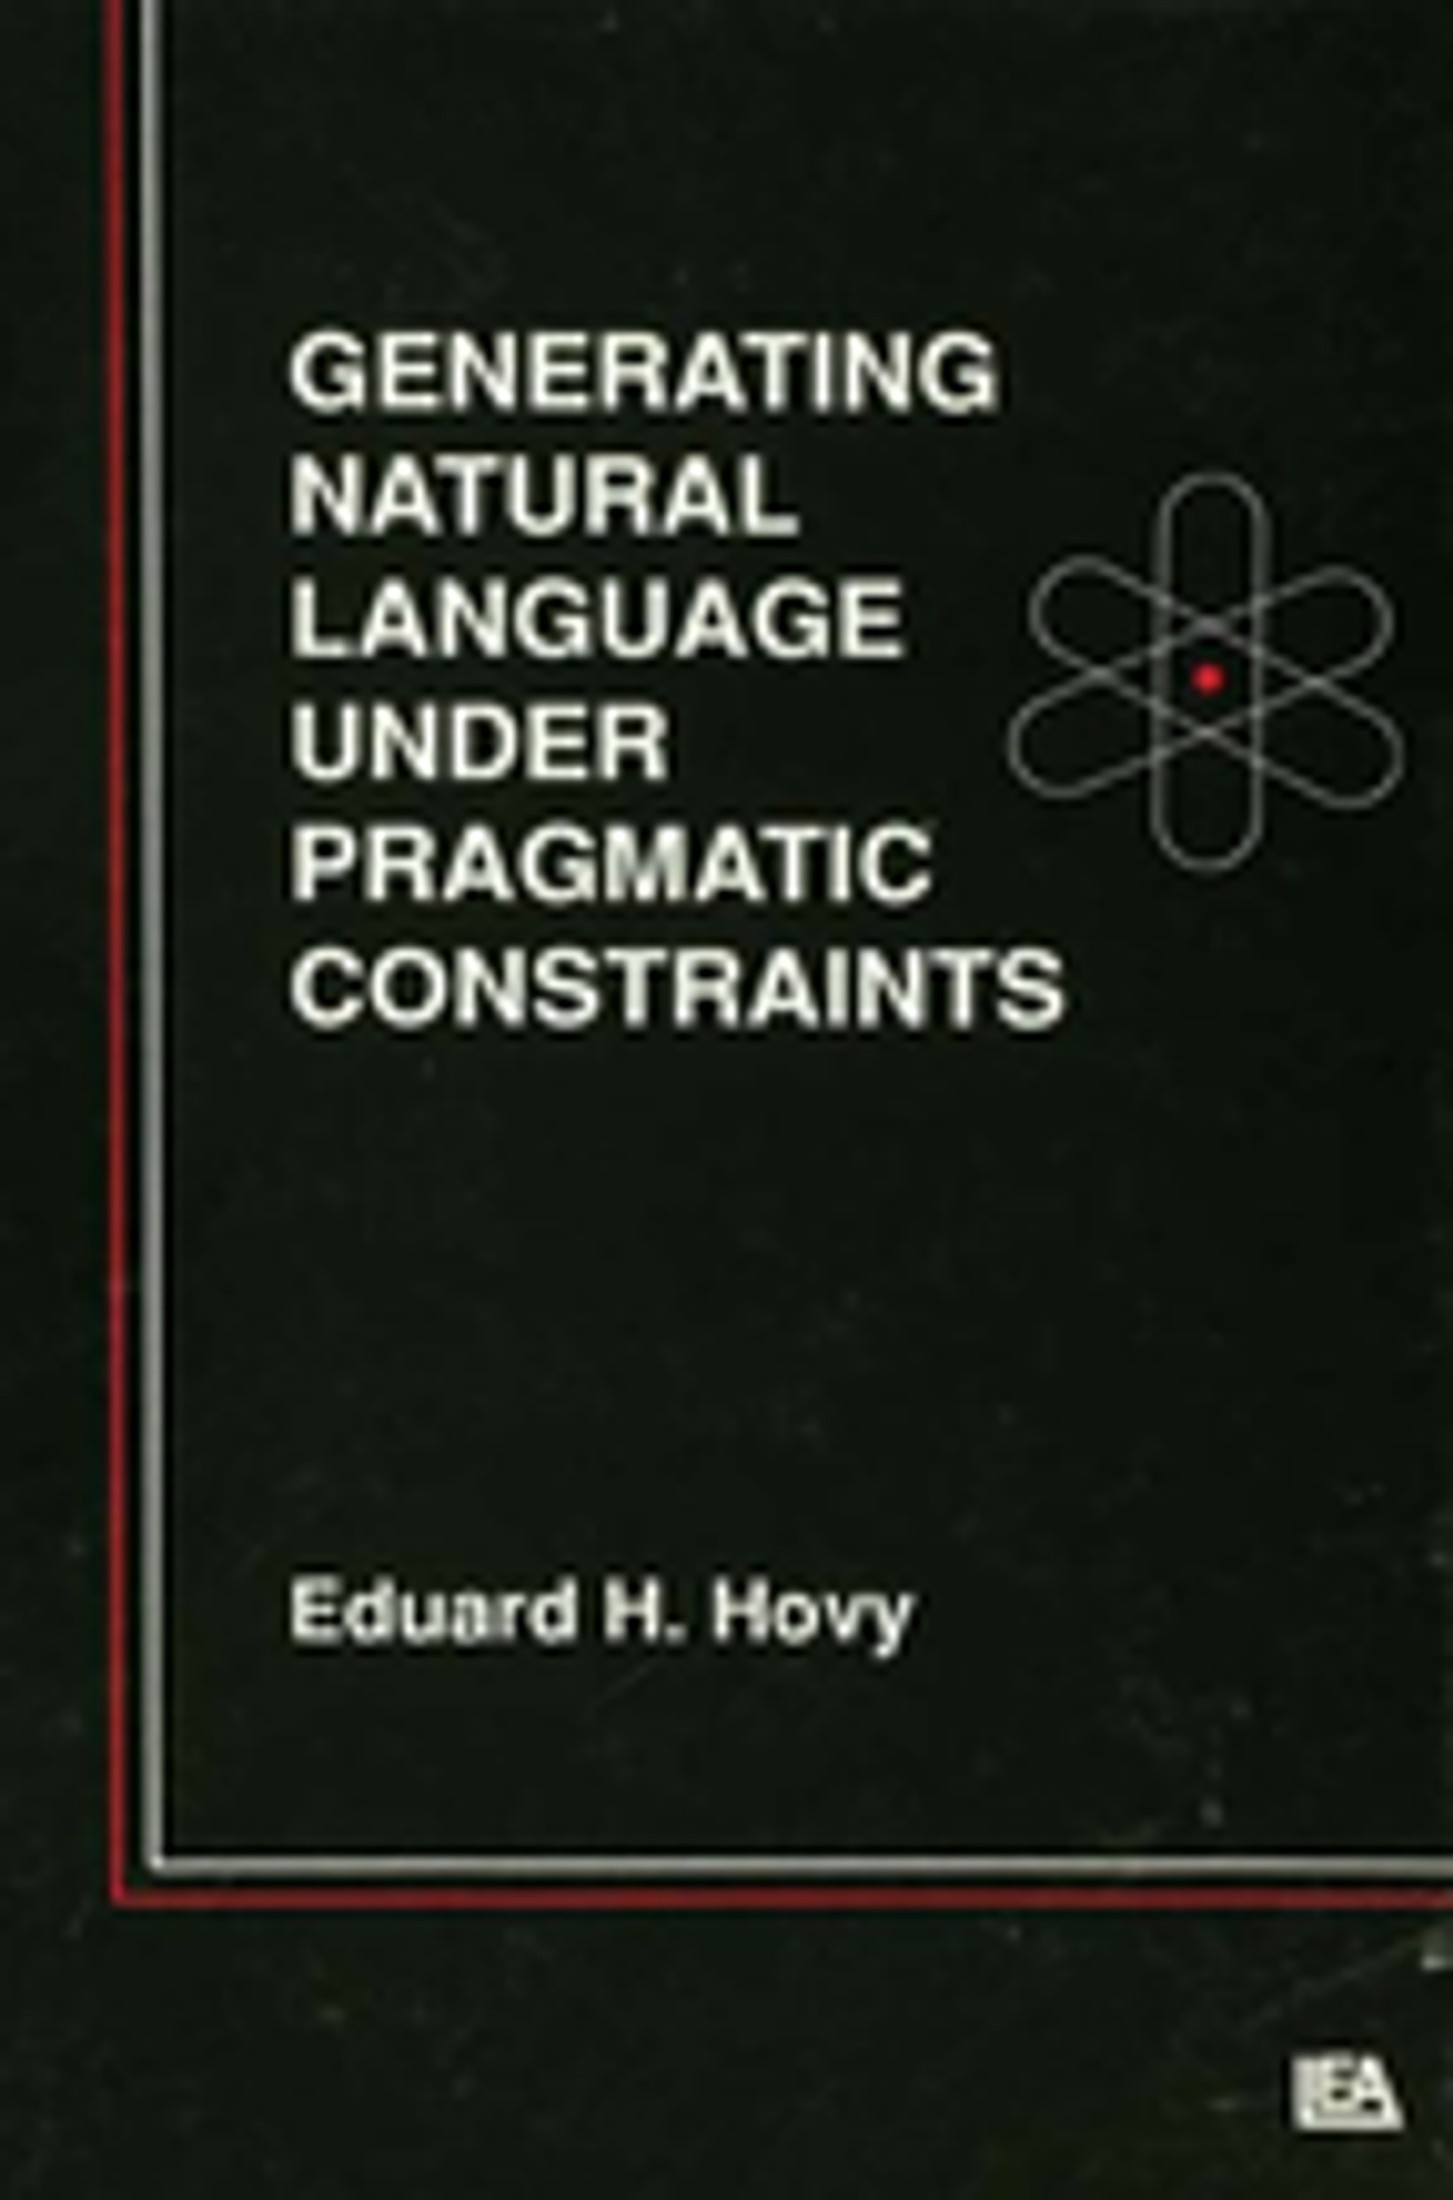 Generating Natural Language Under Pragmatic Constraints